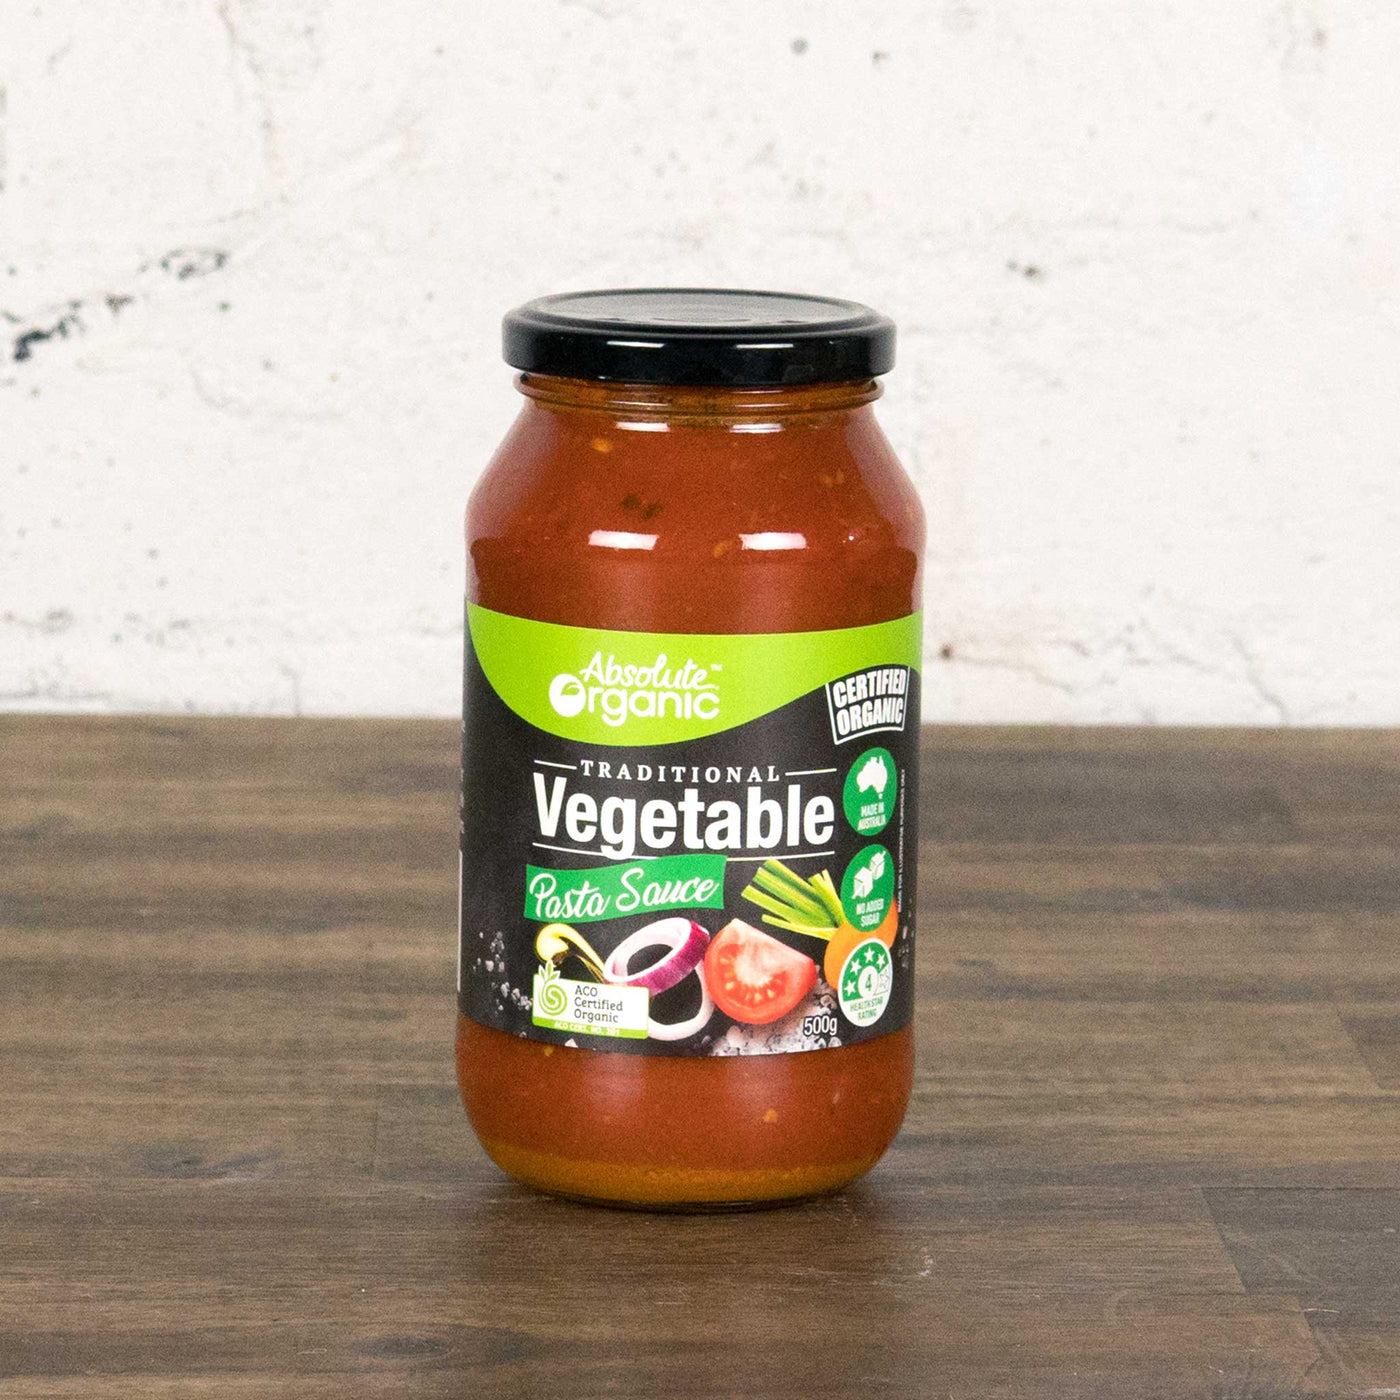 Absolute Organics Vegetable Pasta Sauce